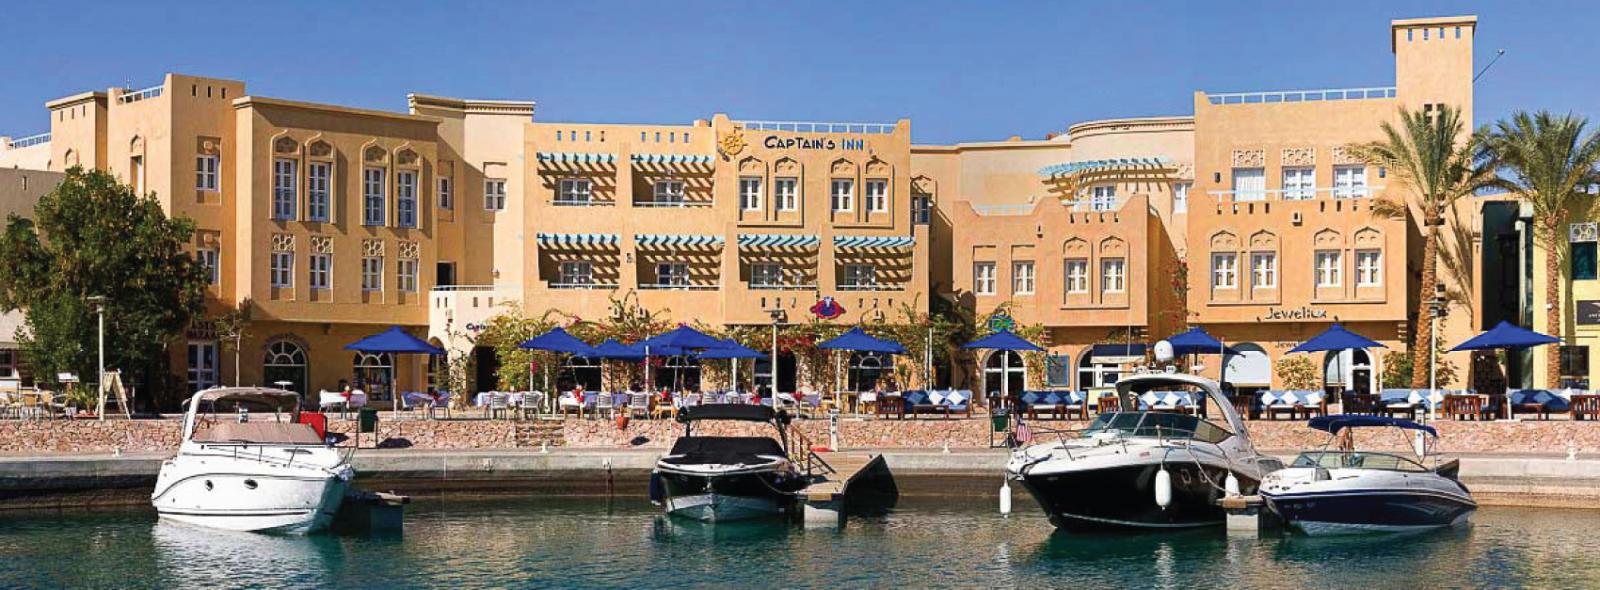 Port et facade de l'hotel Captain Inn à El Gouna en Egypte